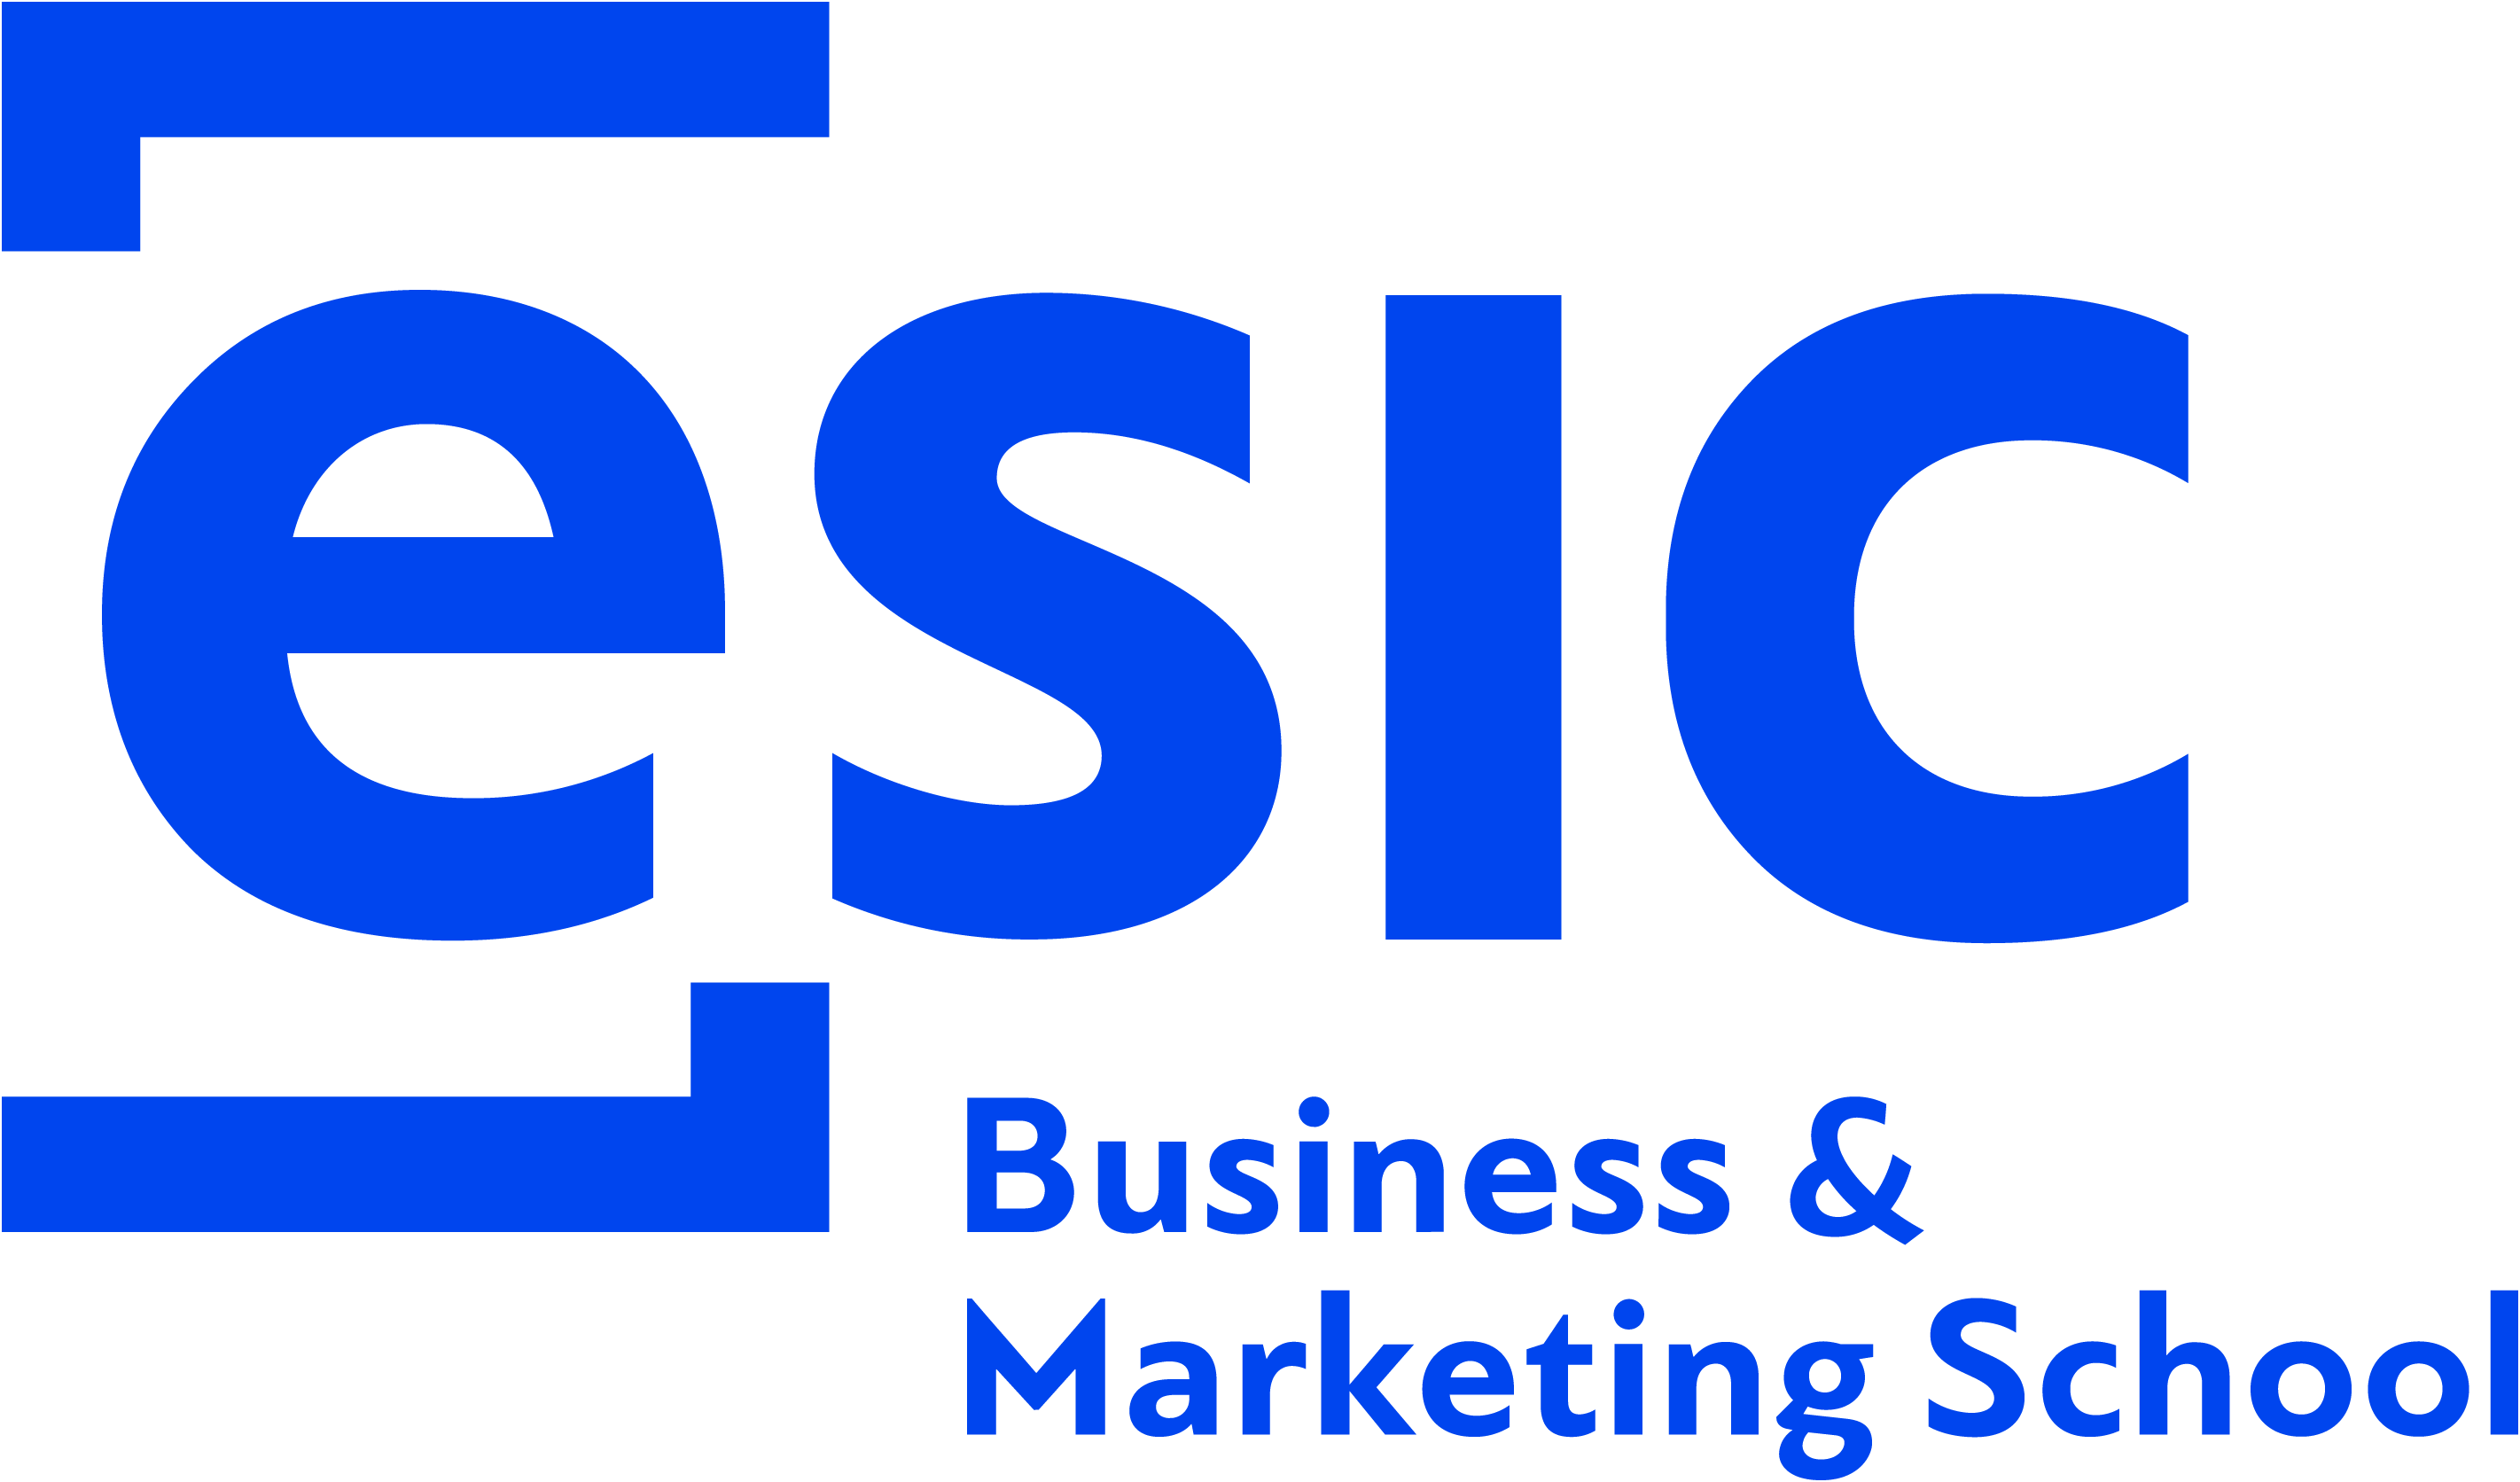 ESIC nuevo logo (1)